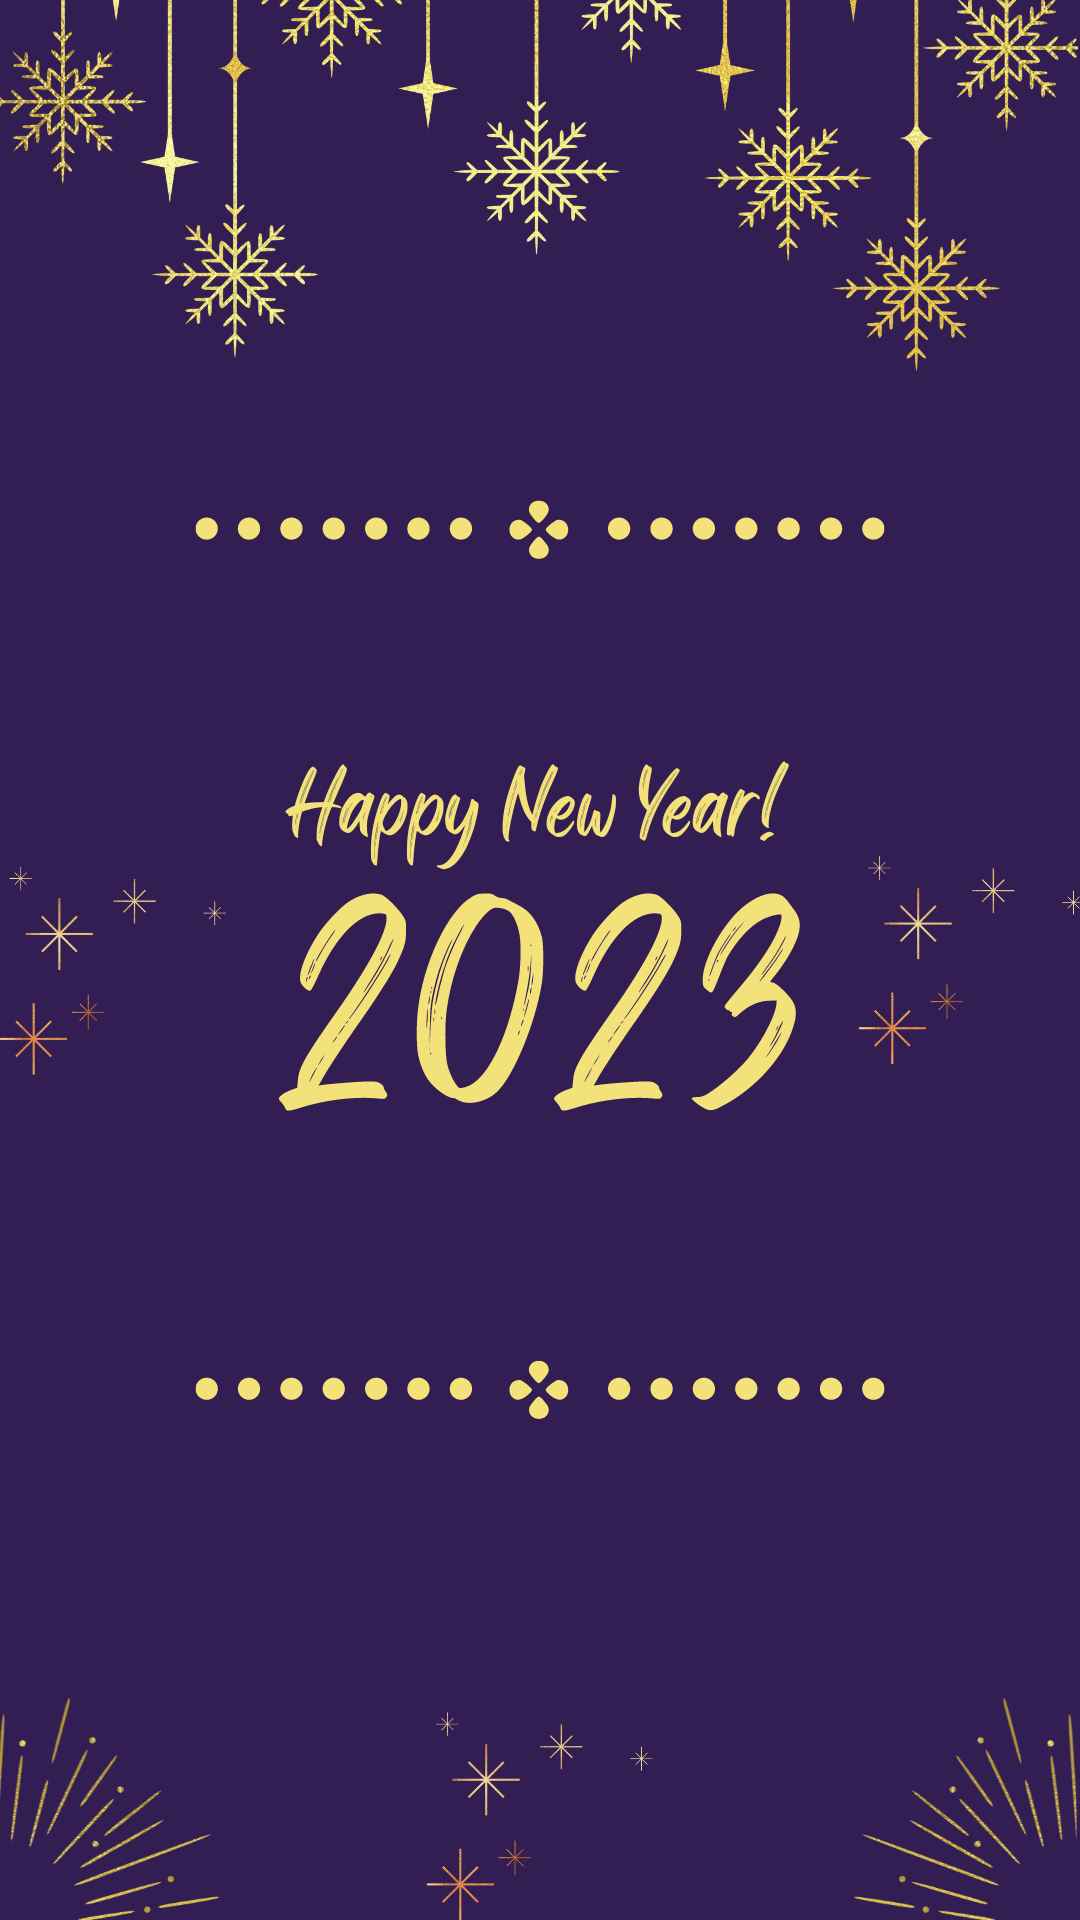 Happy New Year 2023 Images Download  Kaushik Venkatesh